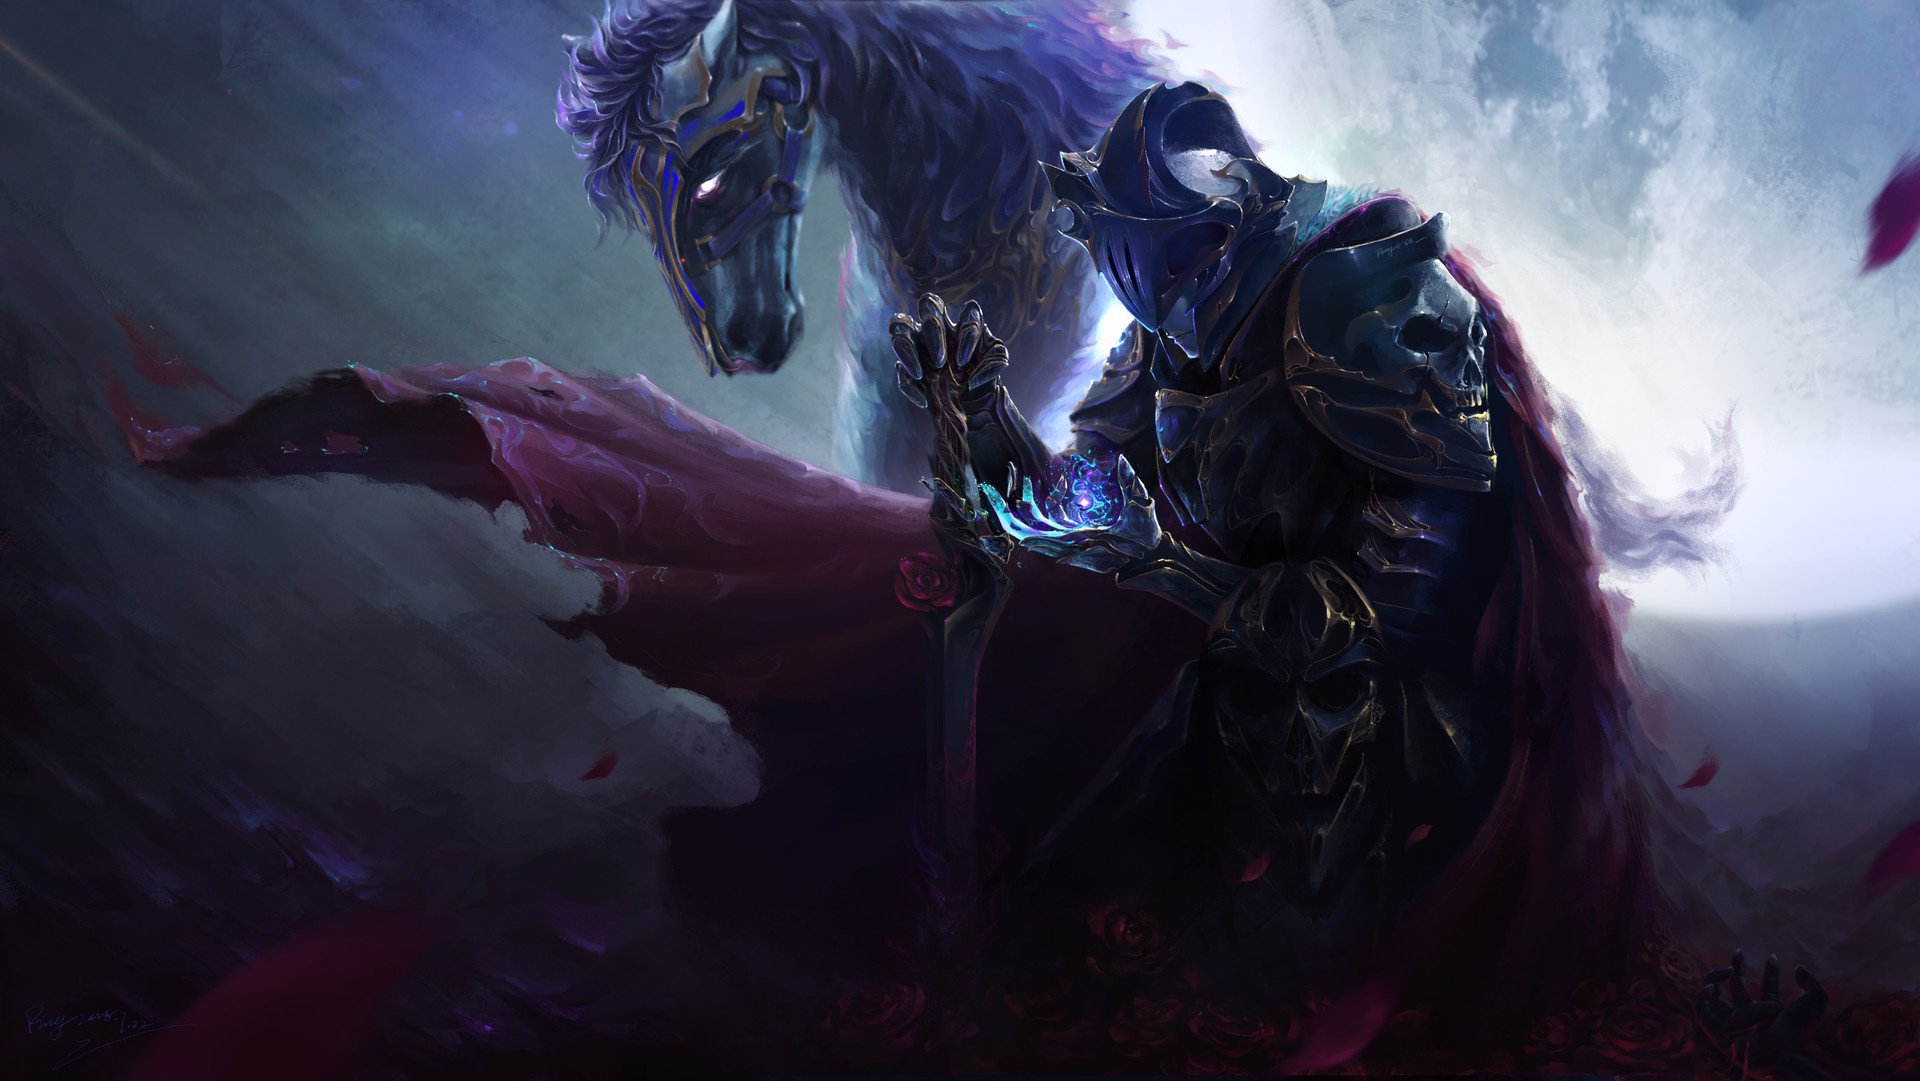 Wallpaper Of Armor Horse Knight Warrior Fantasy Background